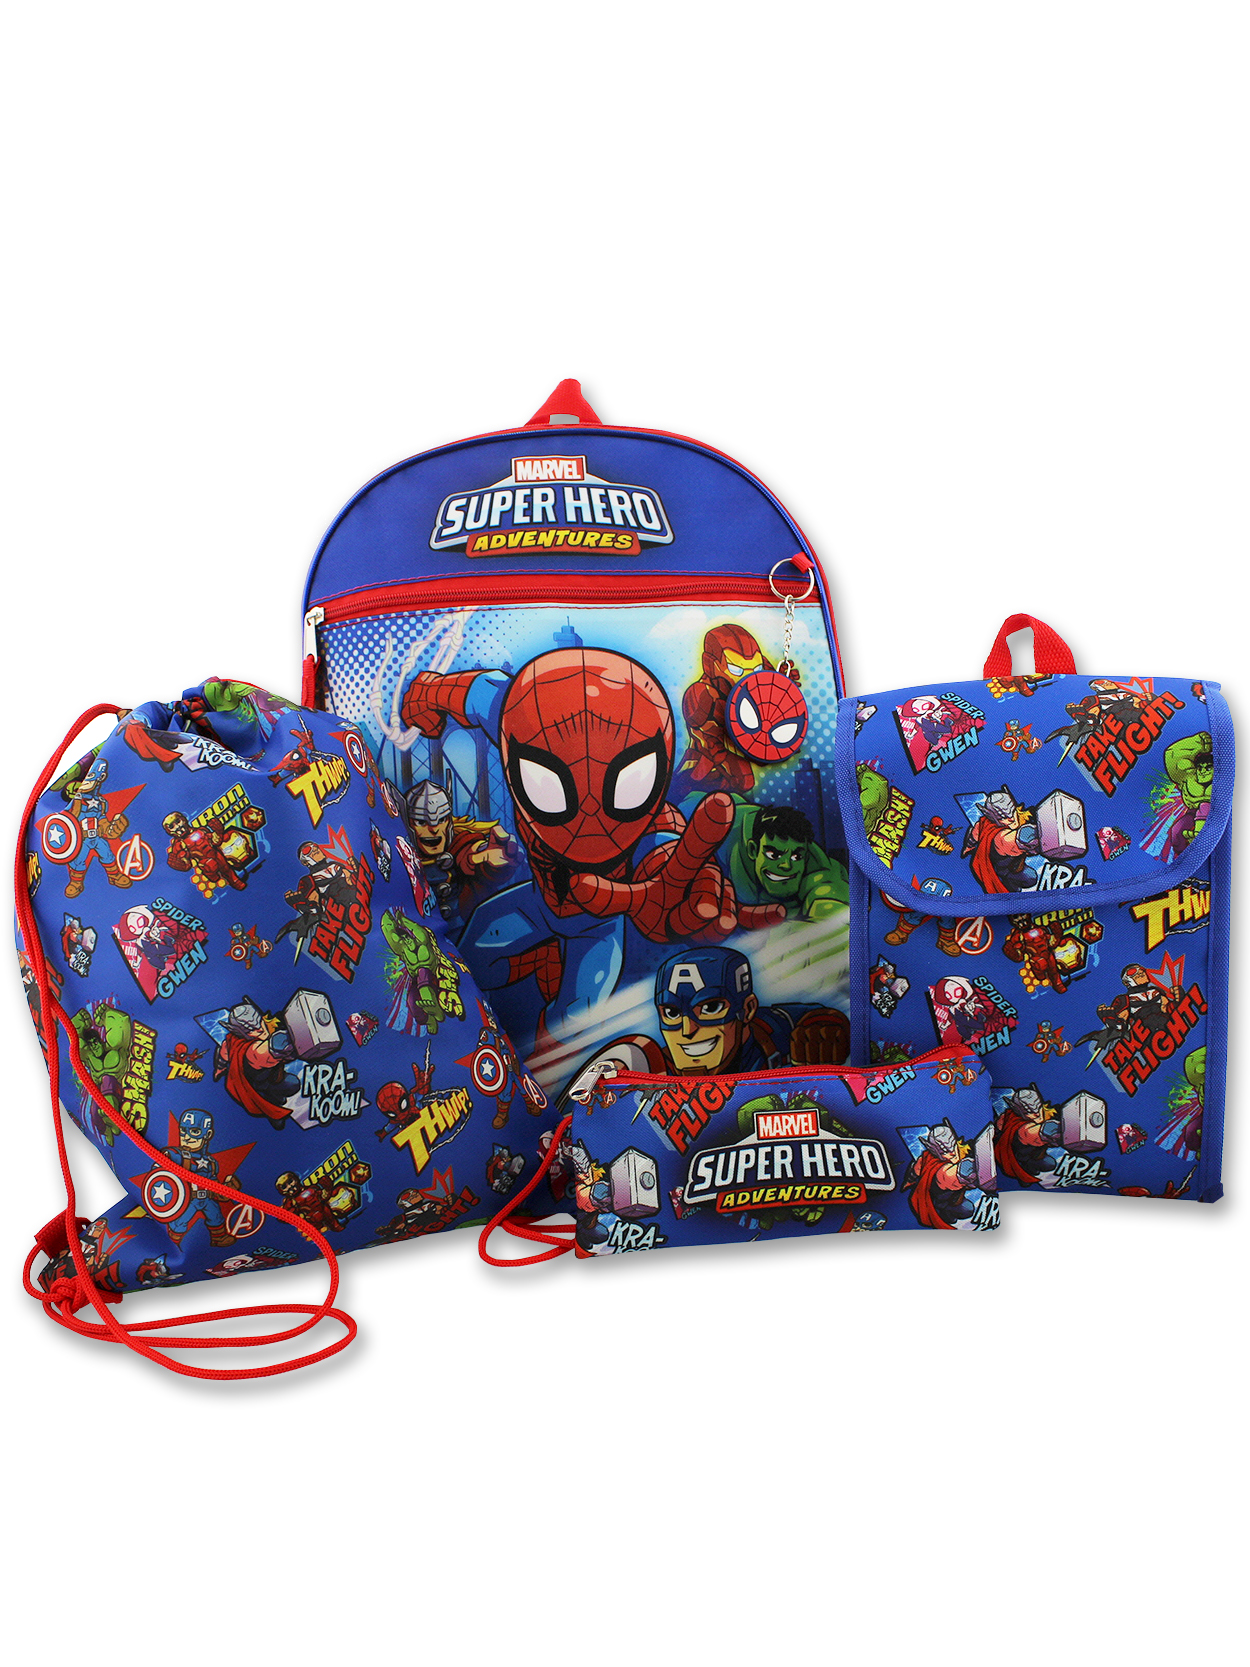 Super Hero Adventures Boys 5 piece Backpack and Snack Bag School Set MUCF5K3YT - image 1 of 7